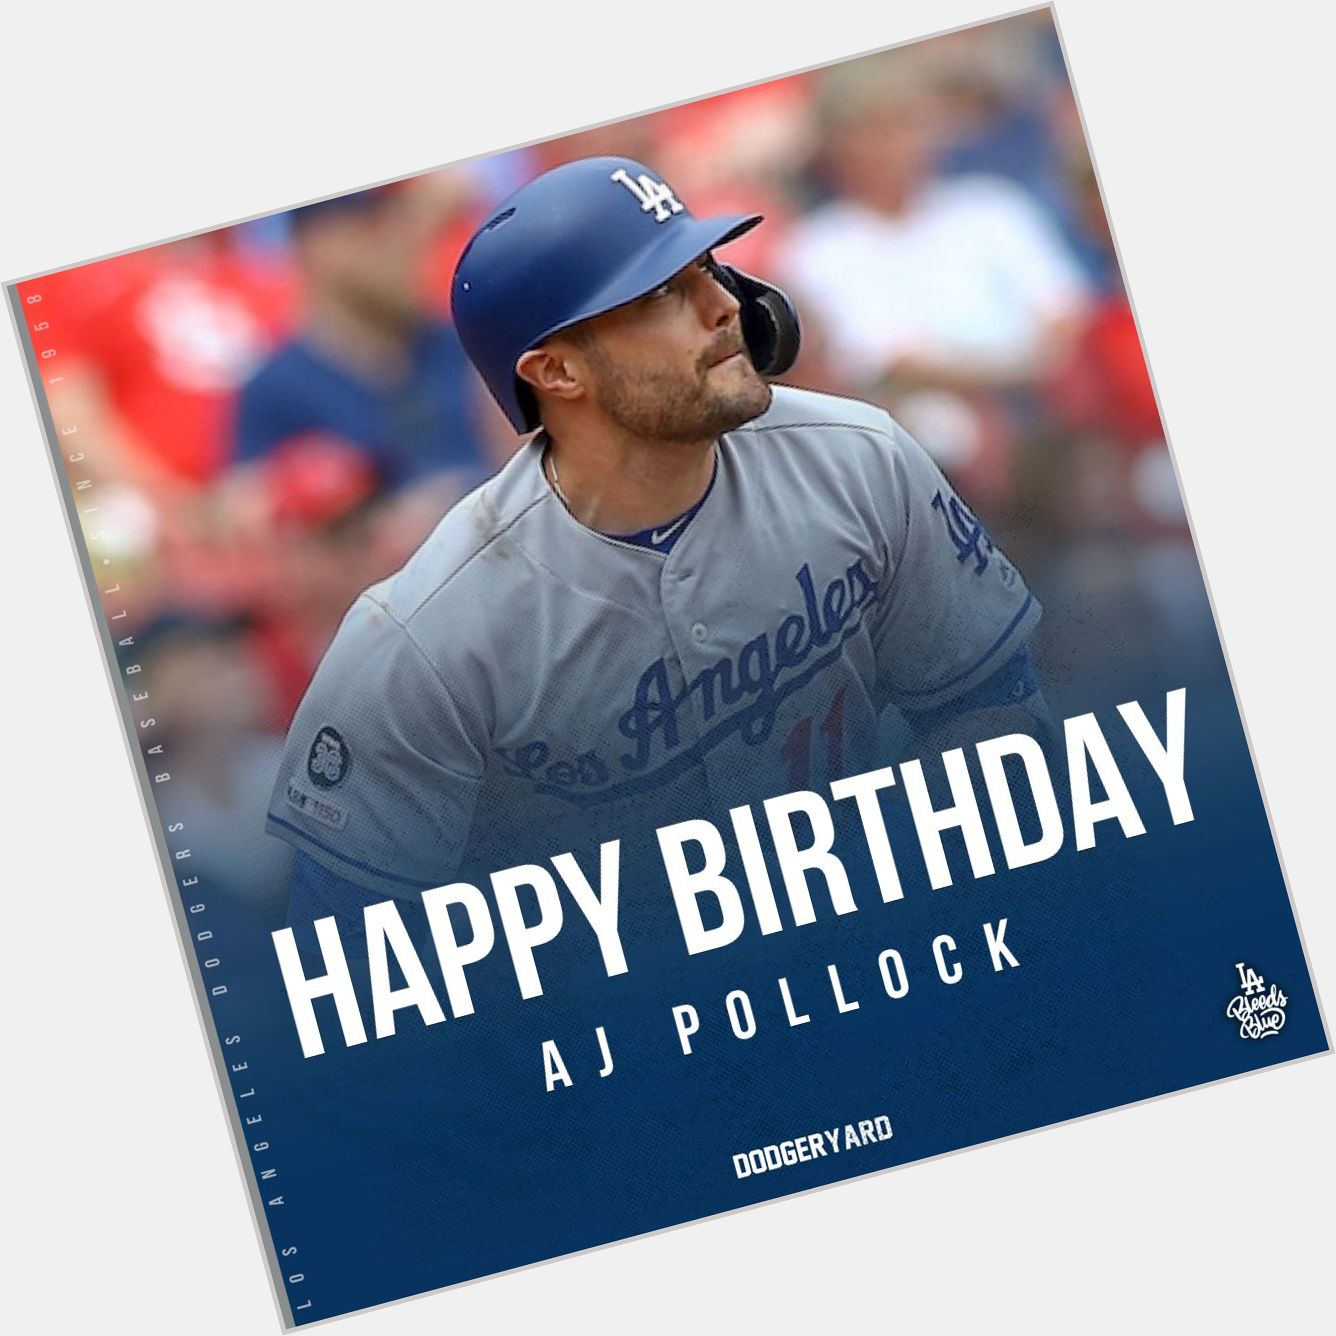 Happy birthday AJ Pollock!  